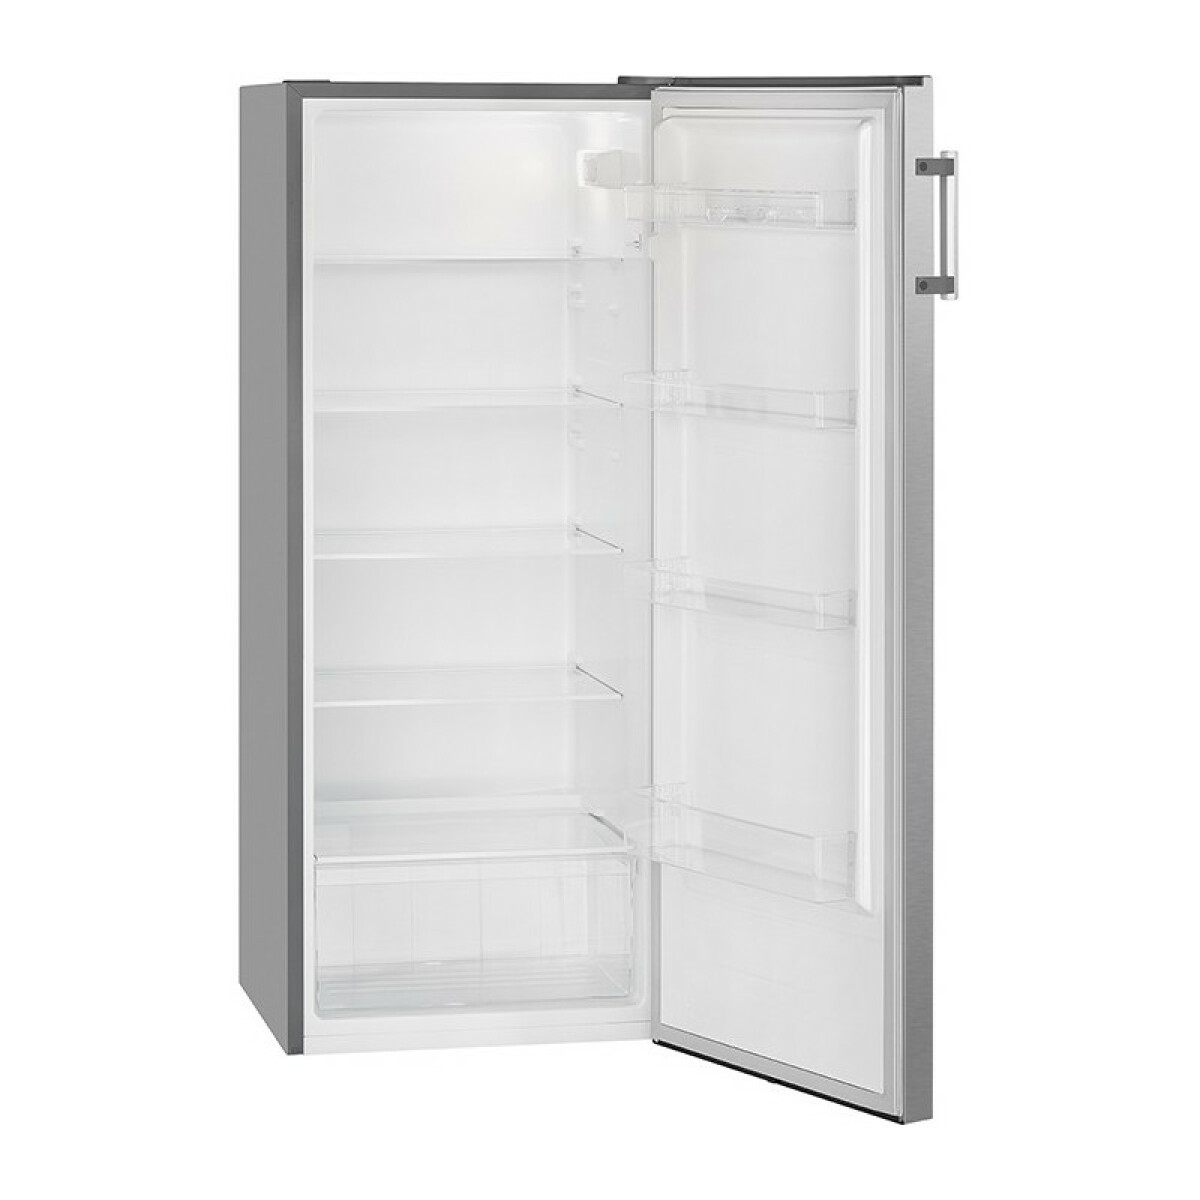 Réfrigérateur 242L inox Bomann VS 7316.1 inox